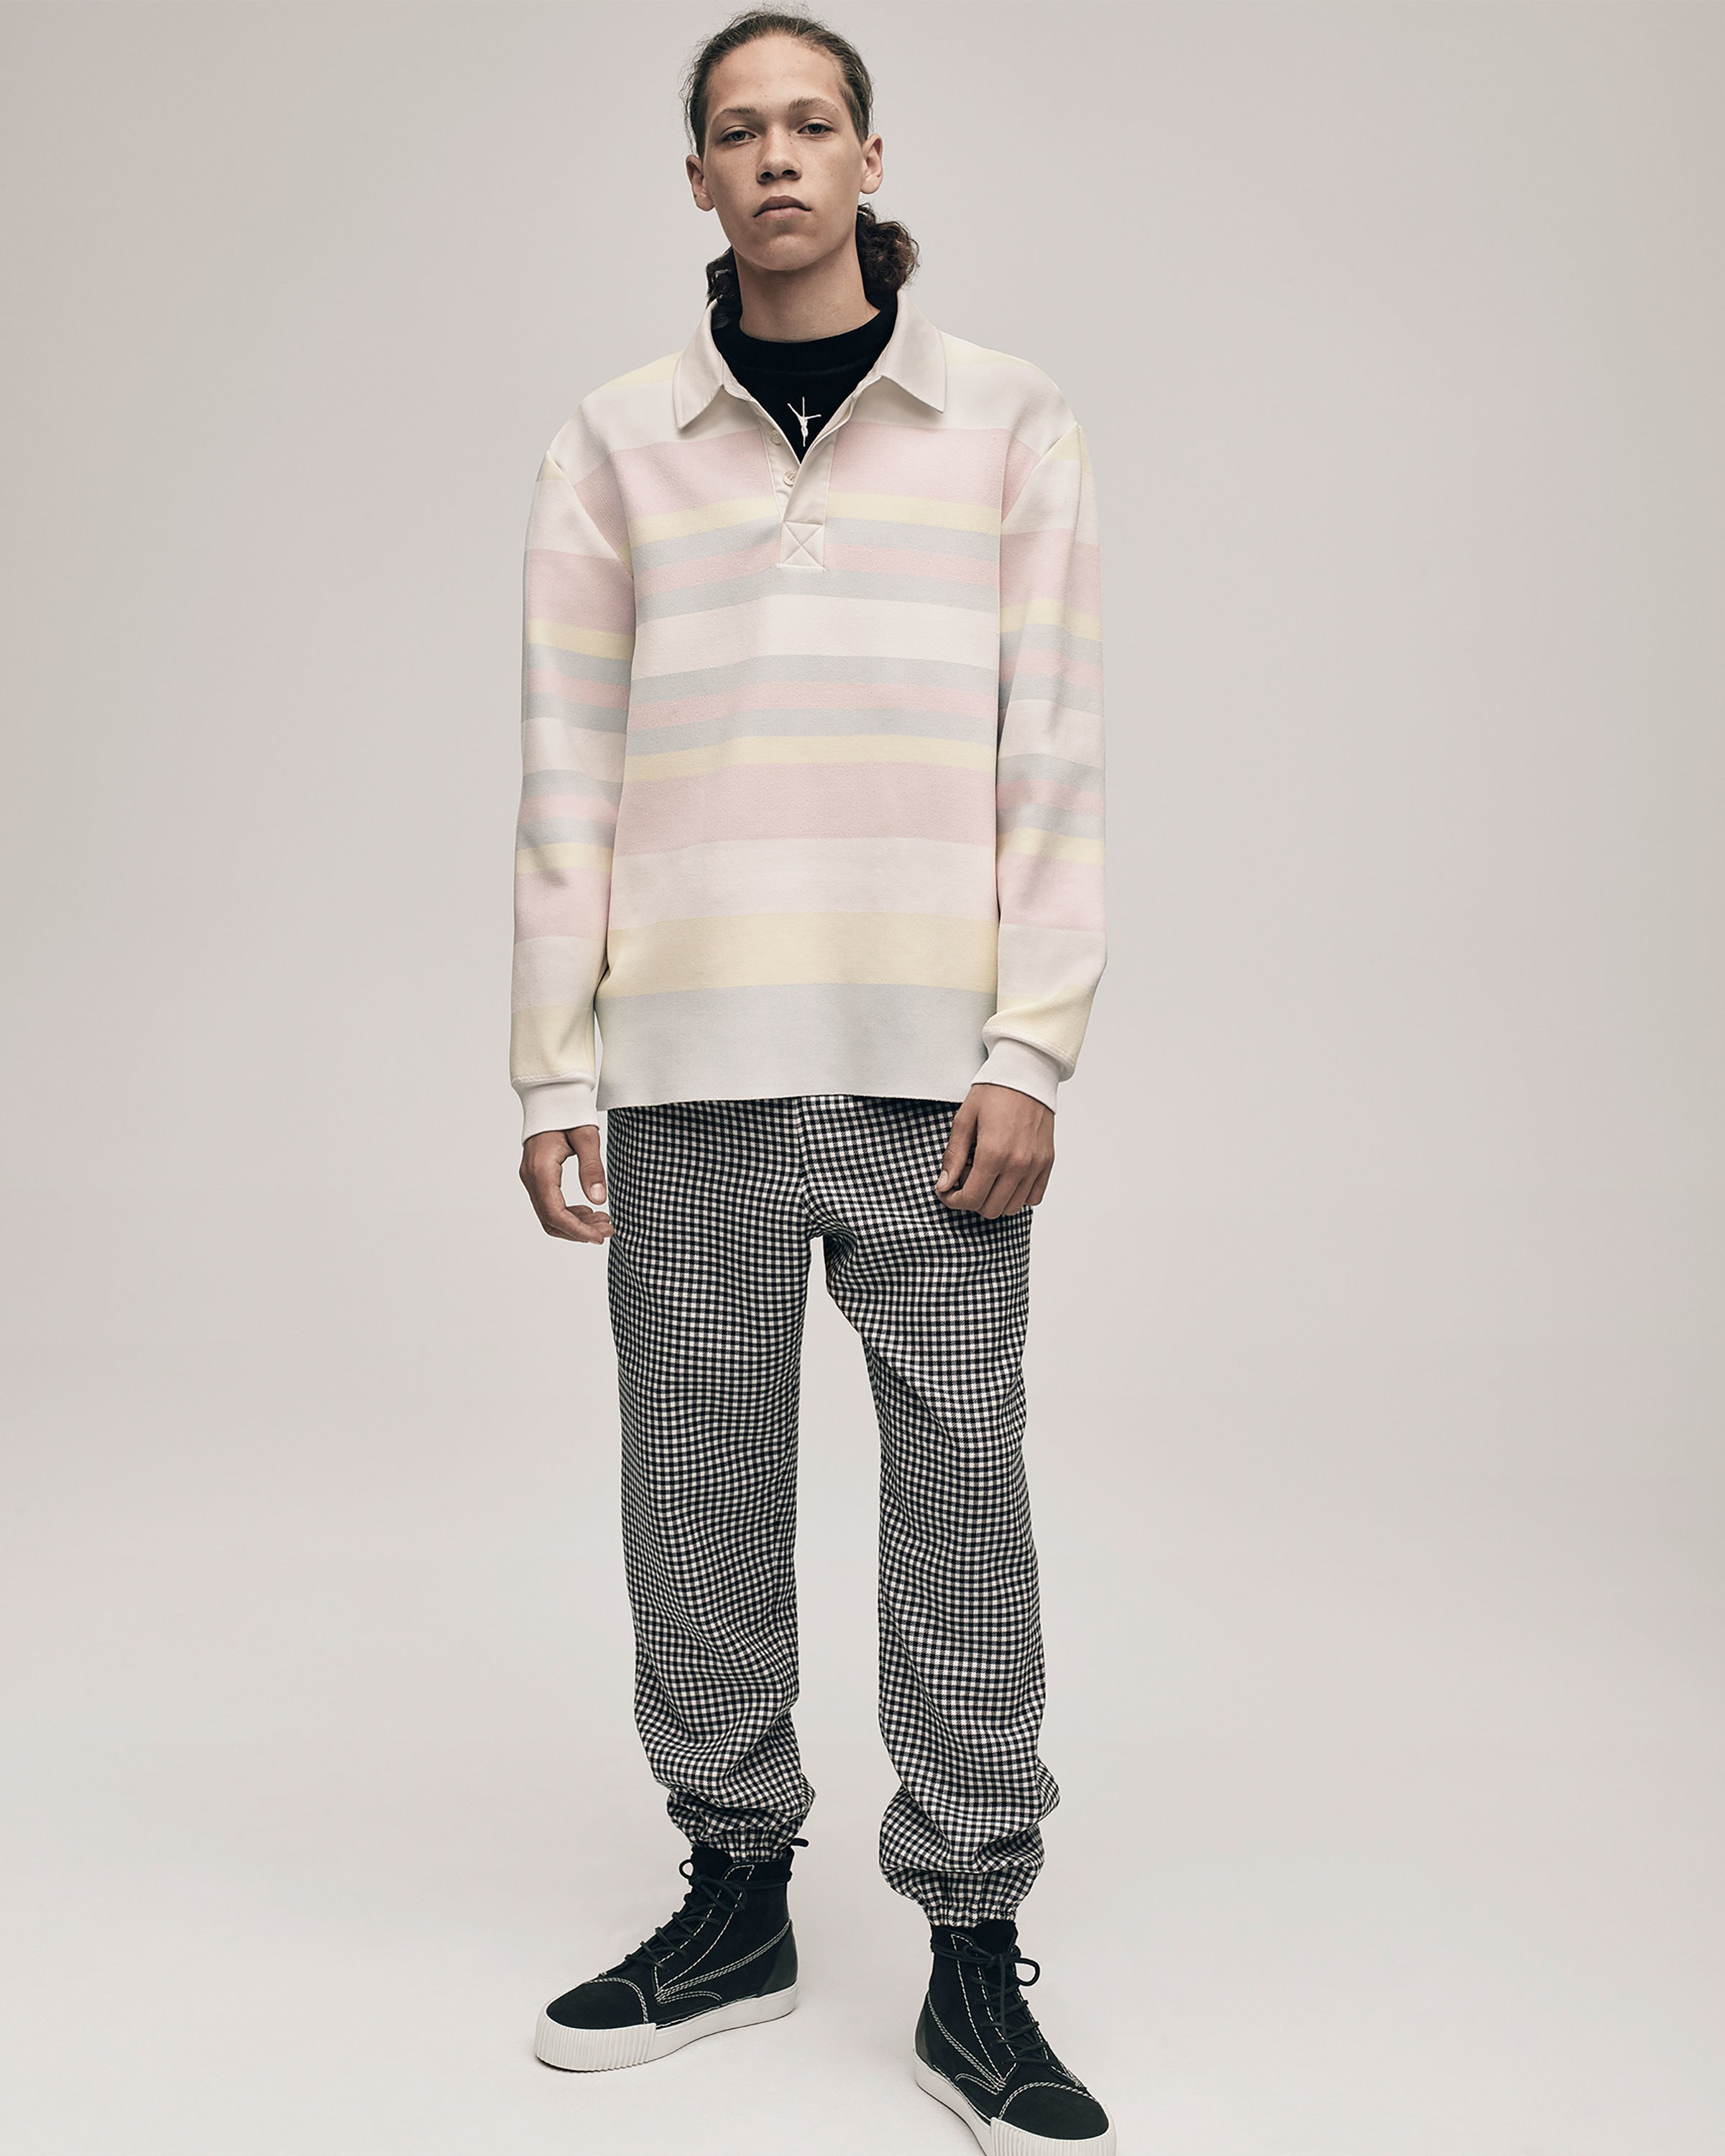 Alexander Wang Spring 2017 Menswear